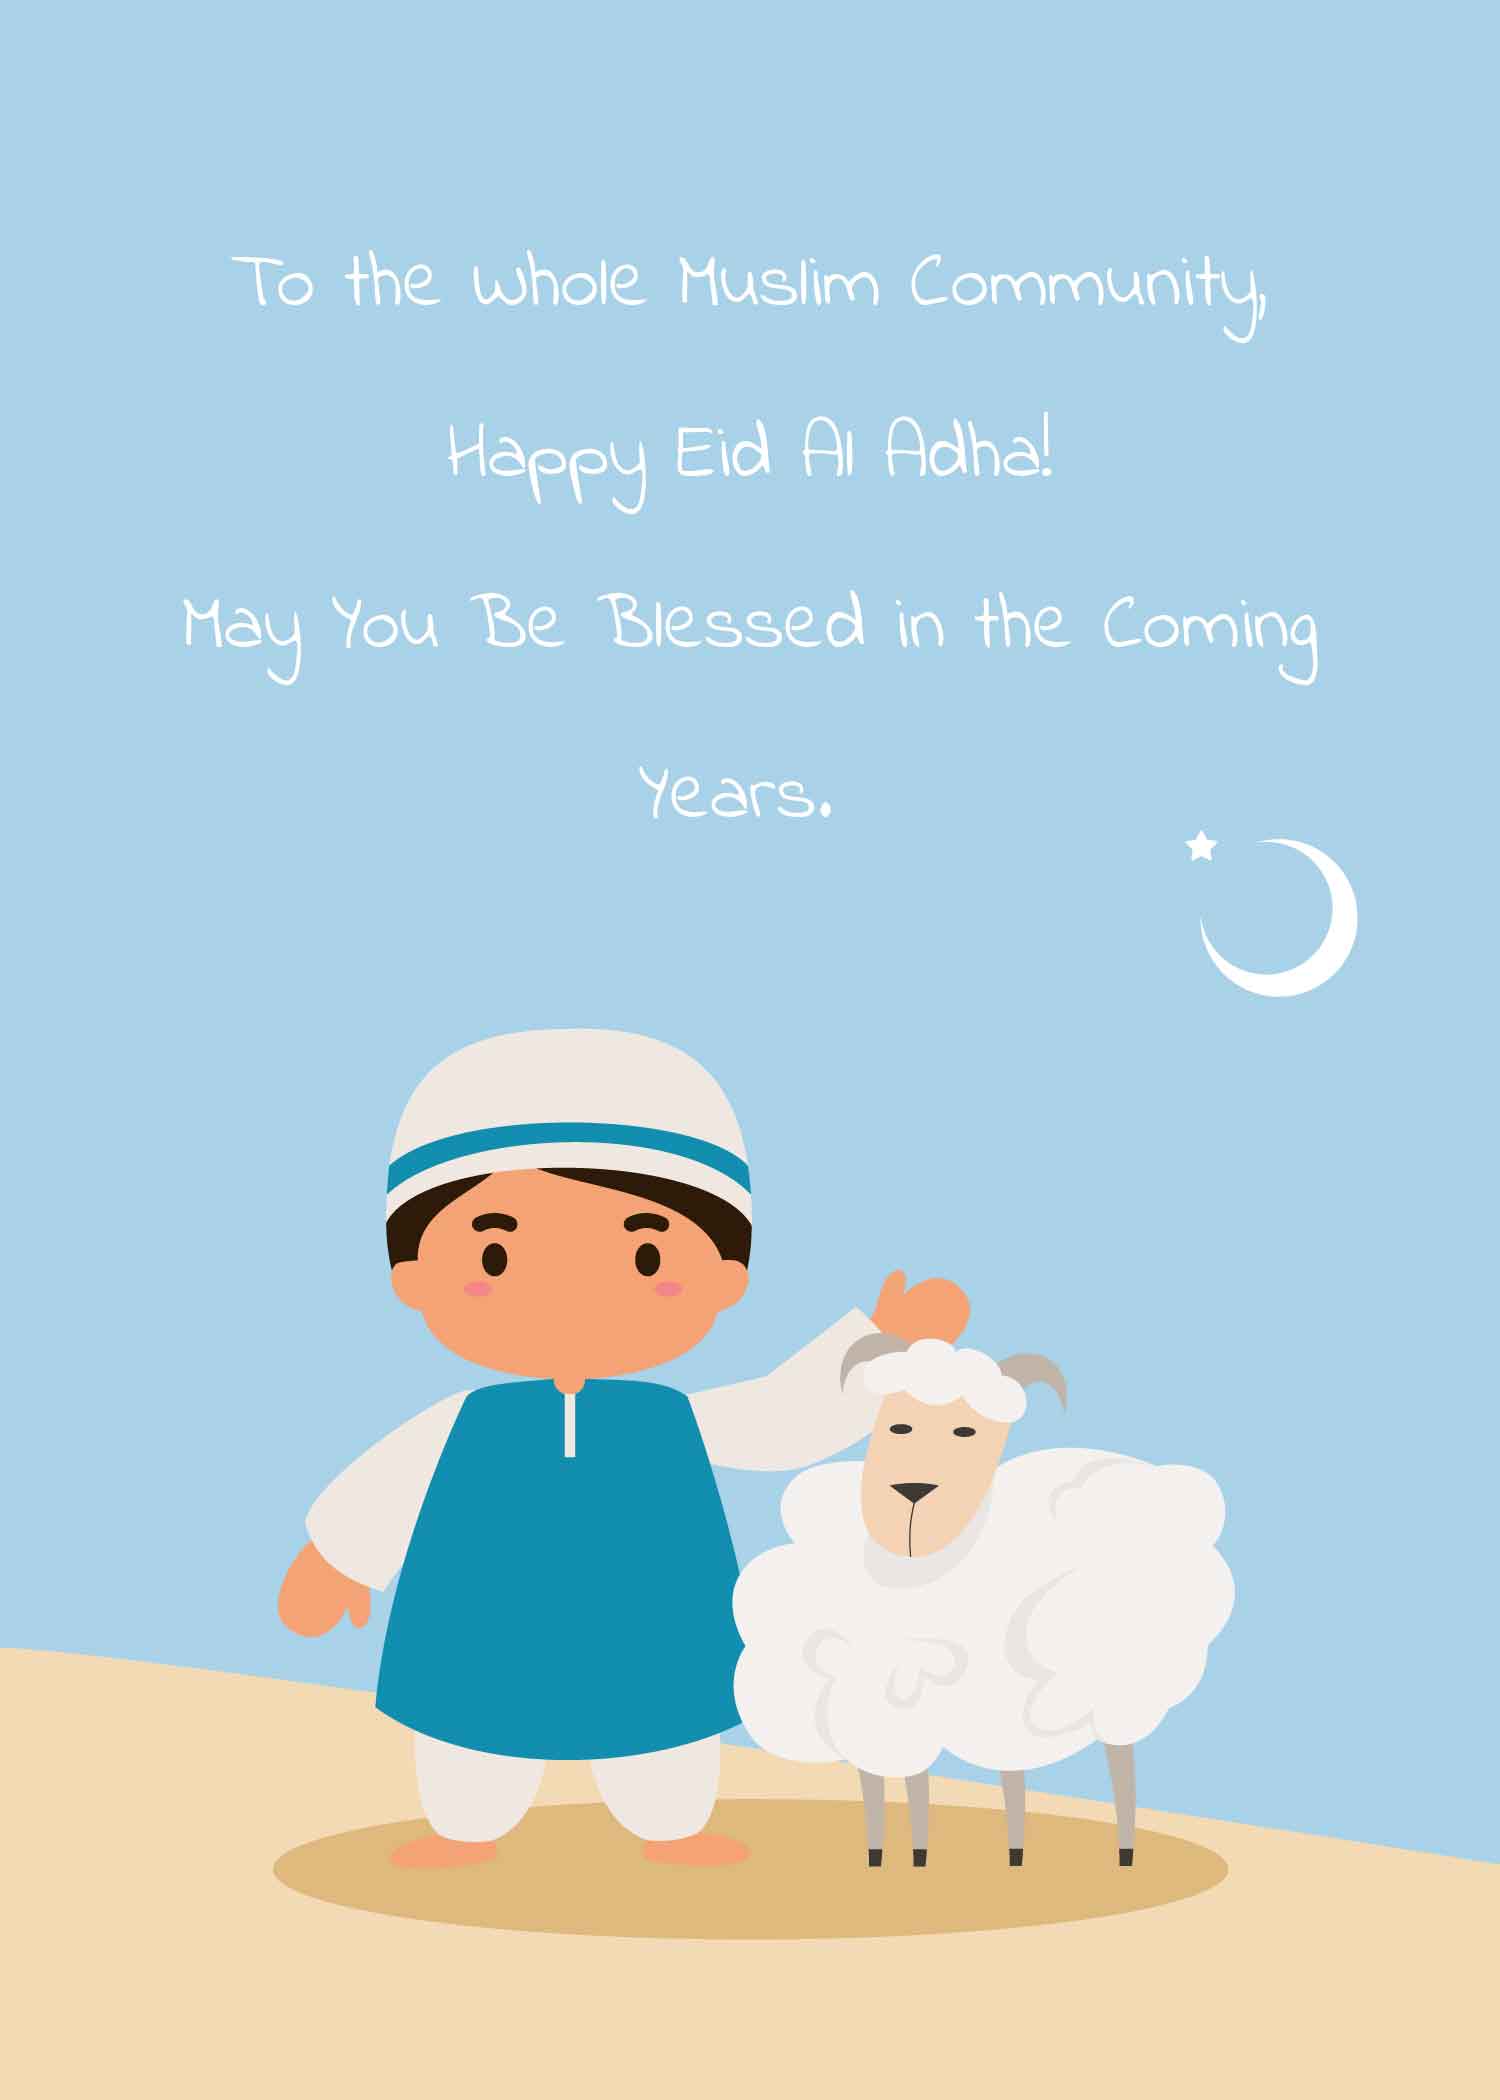 Free Cartoon Eid Al Adha Card in Word, Google Docs, Illustrator, PSD, Apple Pages, Publisher